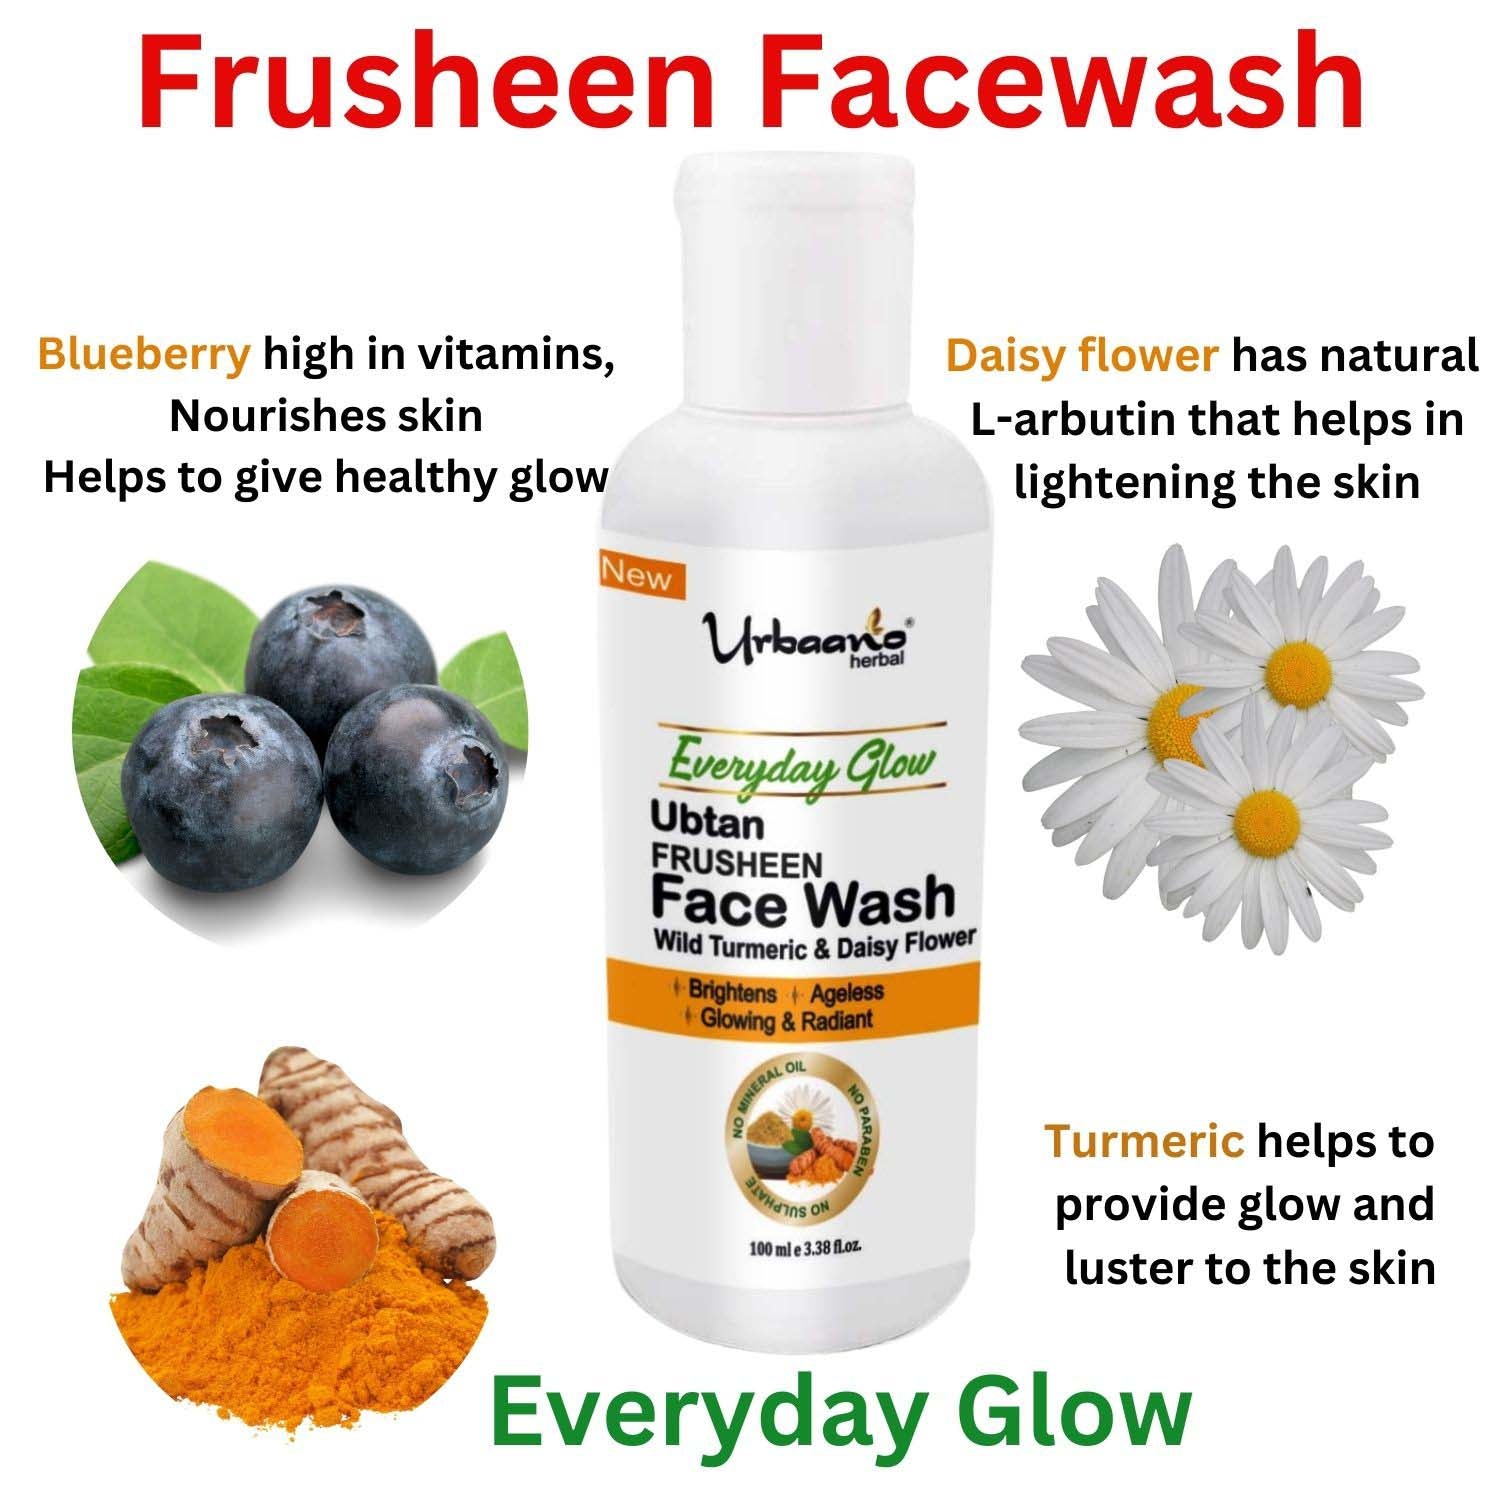 urbaano herbal frusheen face wash ubtan for skin lightening, dark spot, ageless, glowing skin with wild turmeric, blueberry & daisy flower